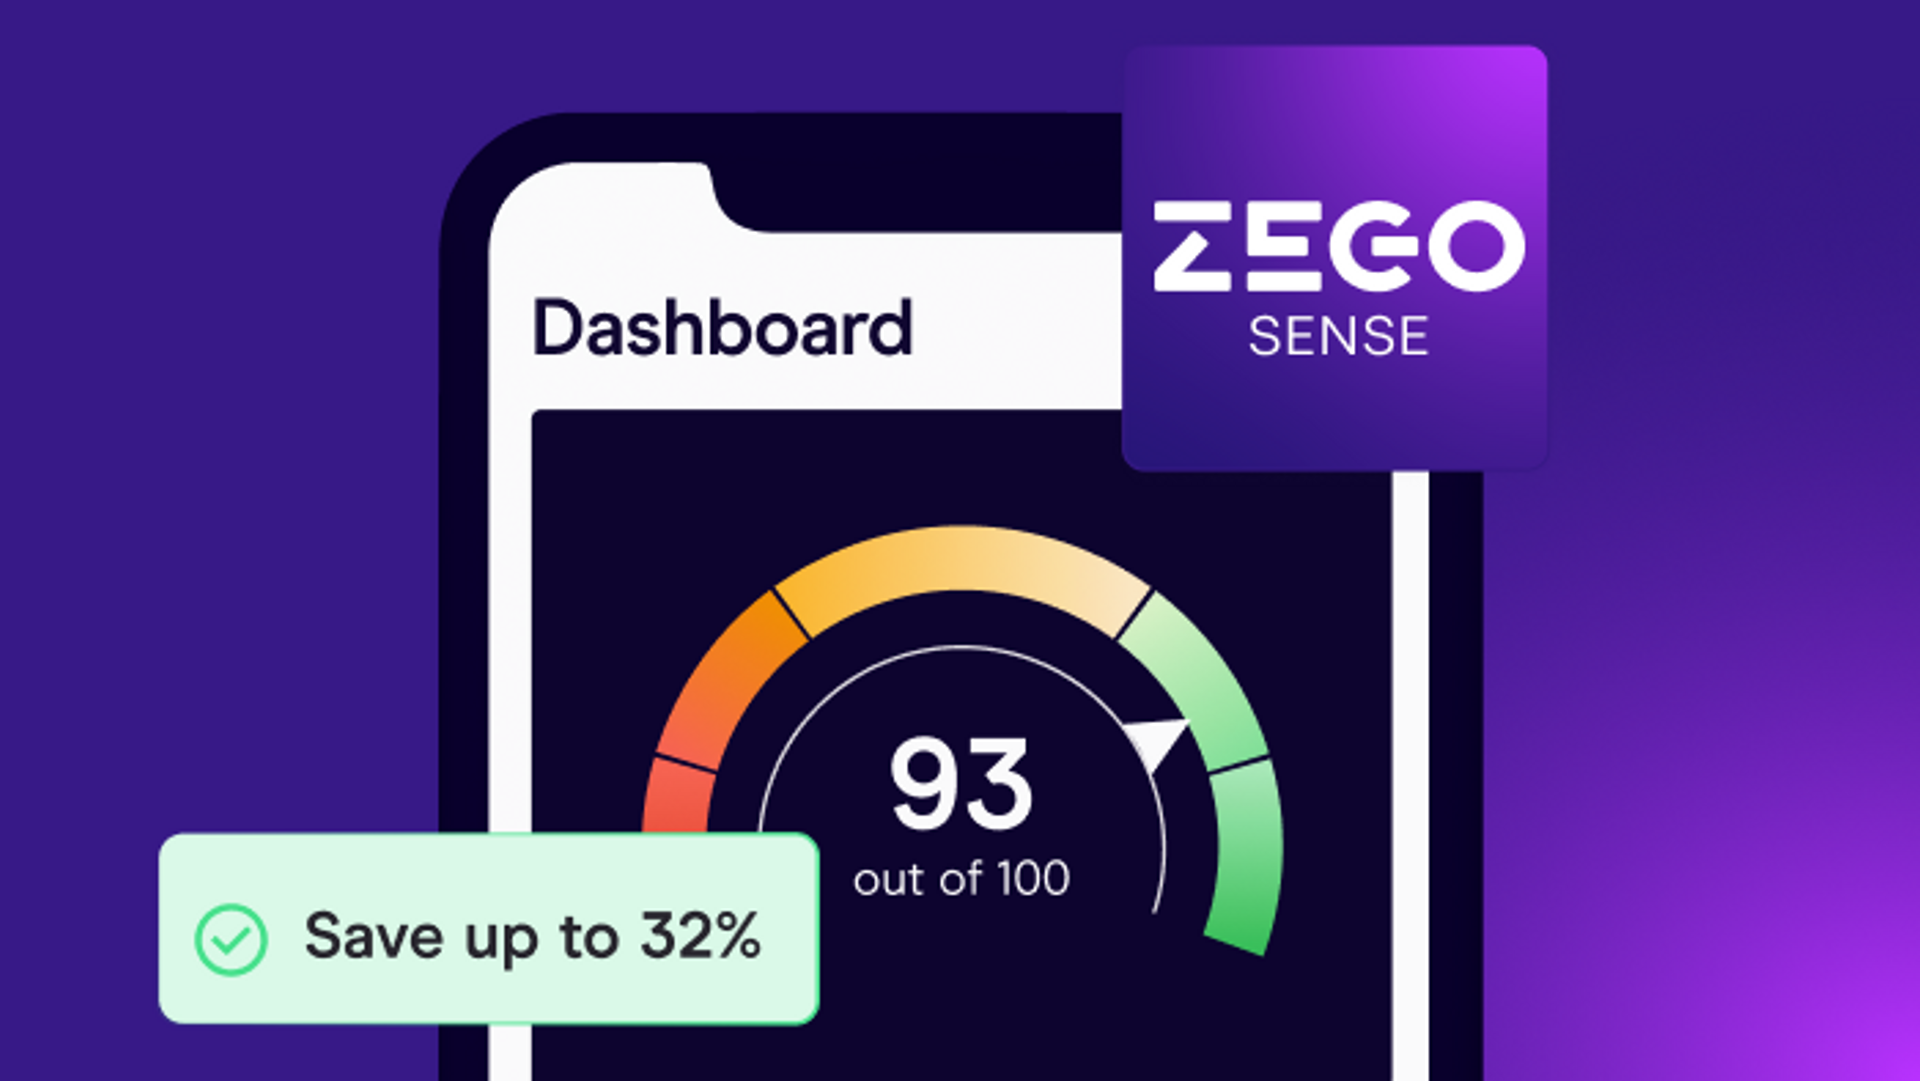 Zego launches Sense